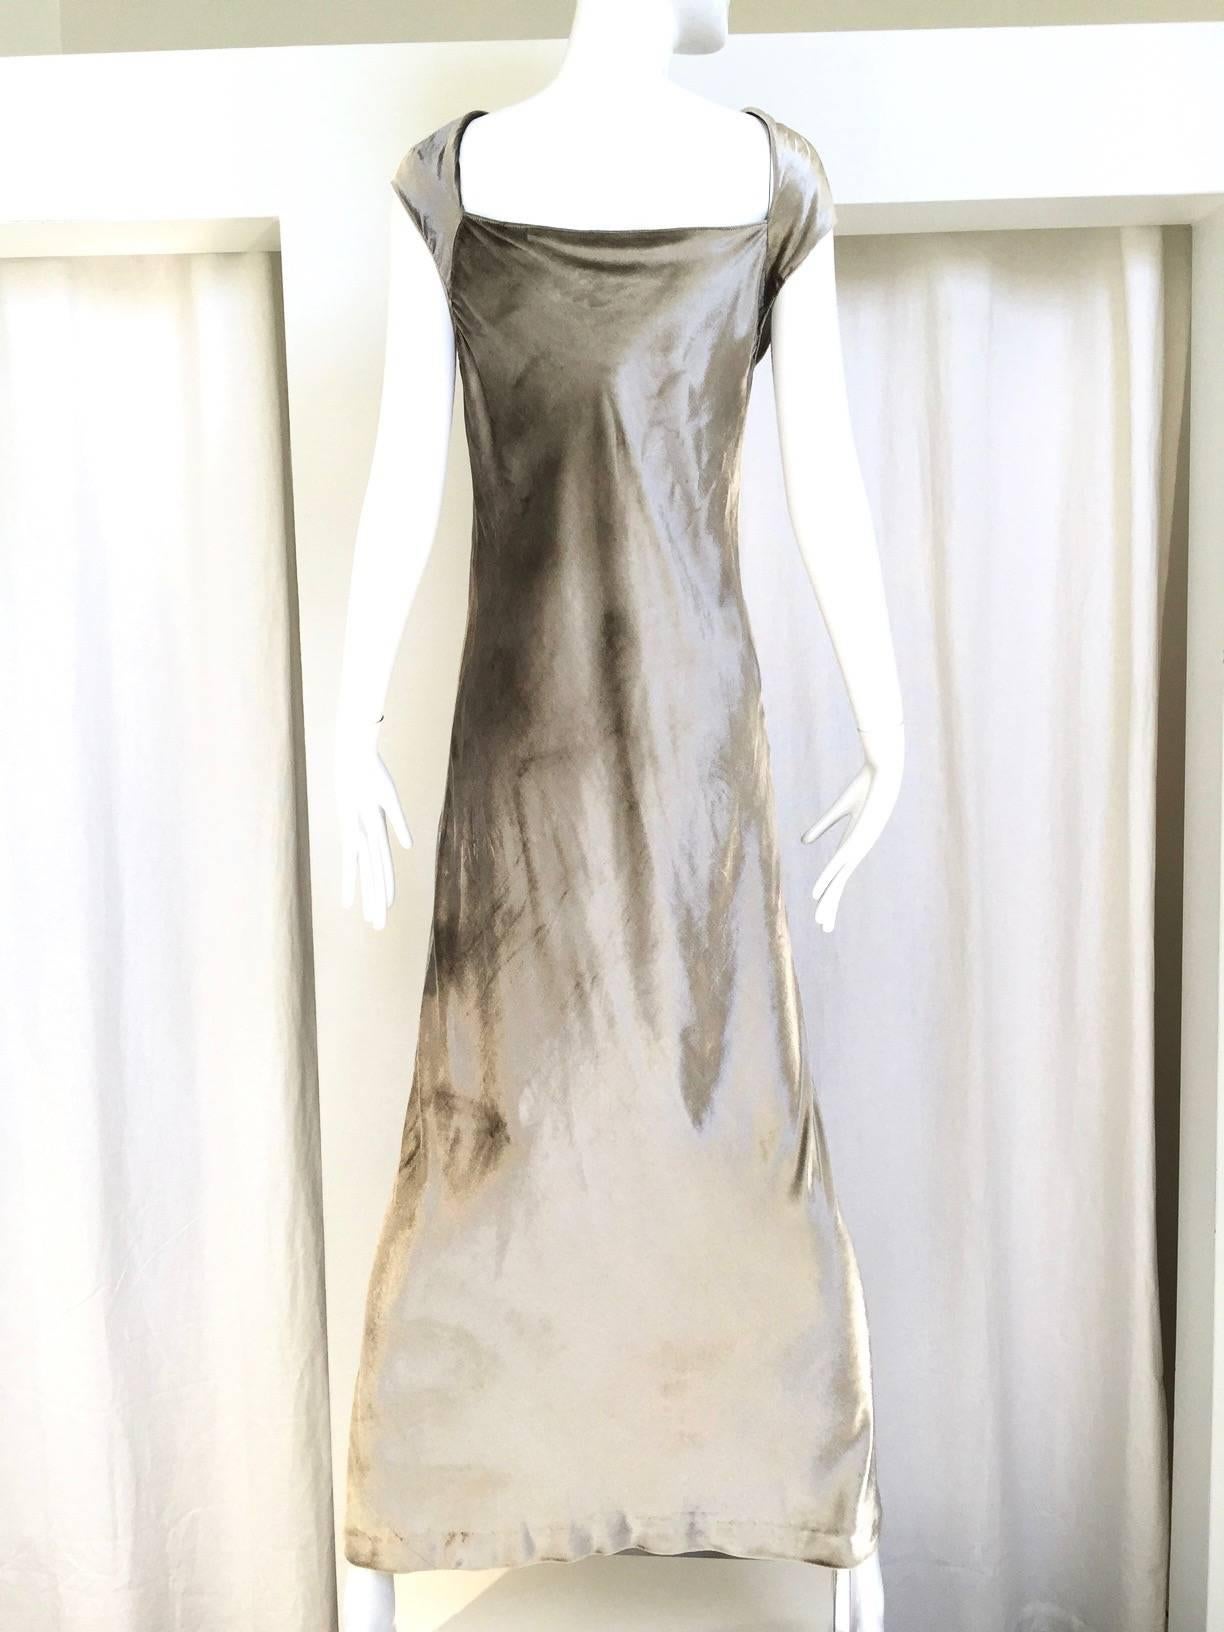 Donna Karan light grey velvet panne dress.
size:  4/6
